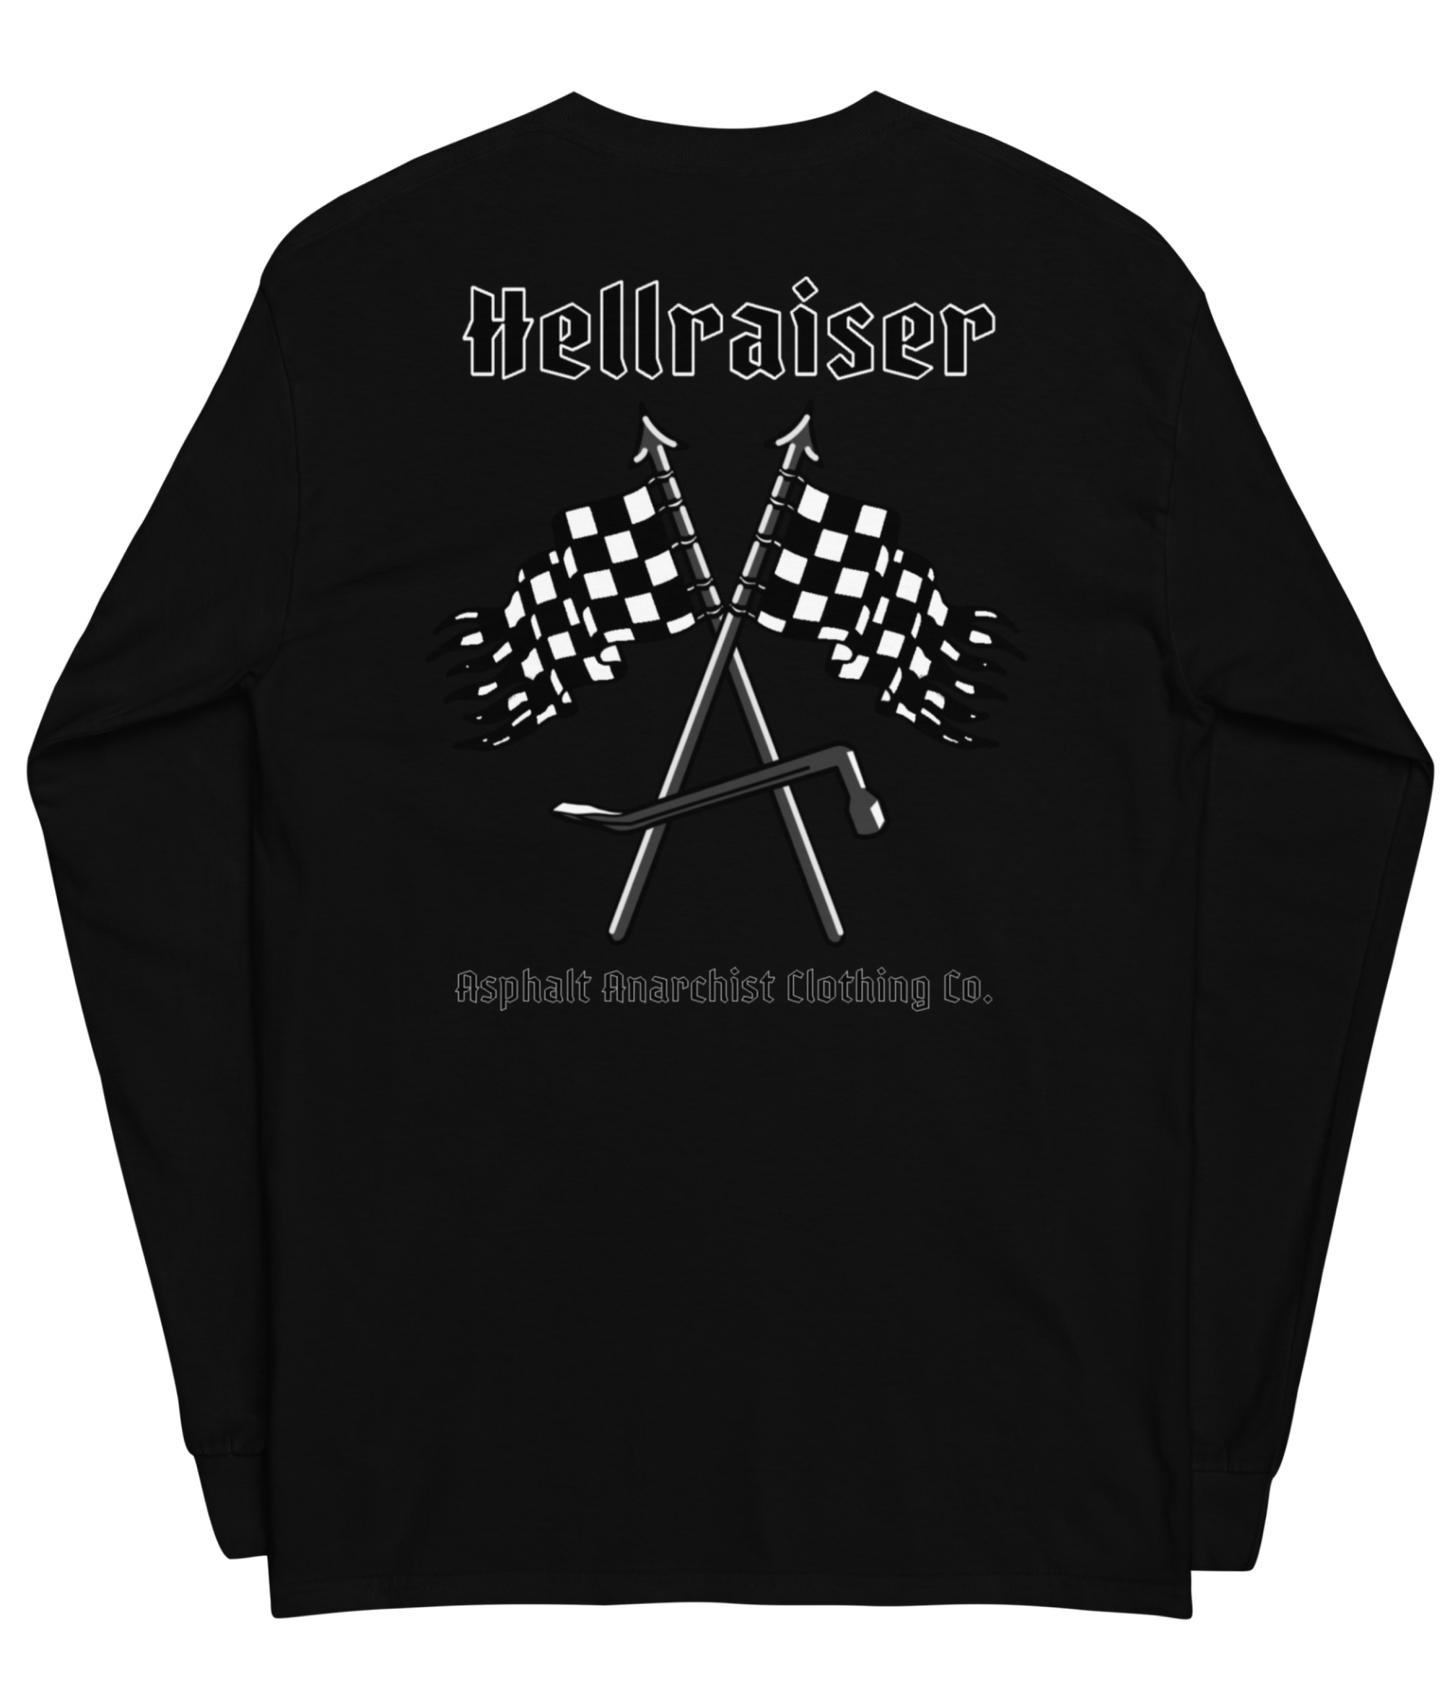 The Hellraiser Long Sleeve Shirt from Asphalt Anarchist Clothing Co. HOT ROD KUSTOM KULTURE APPAREL & PRODUCTS